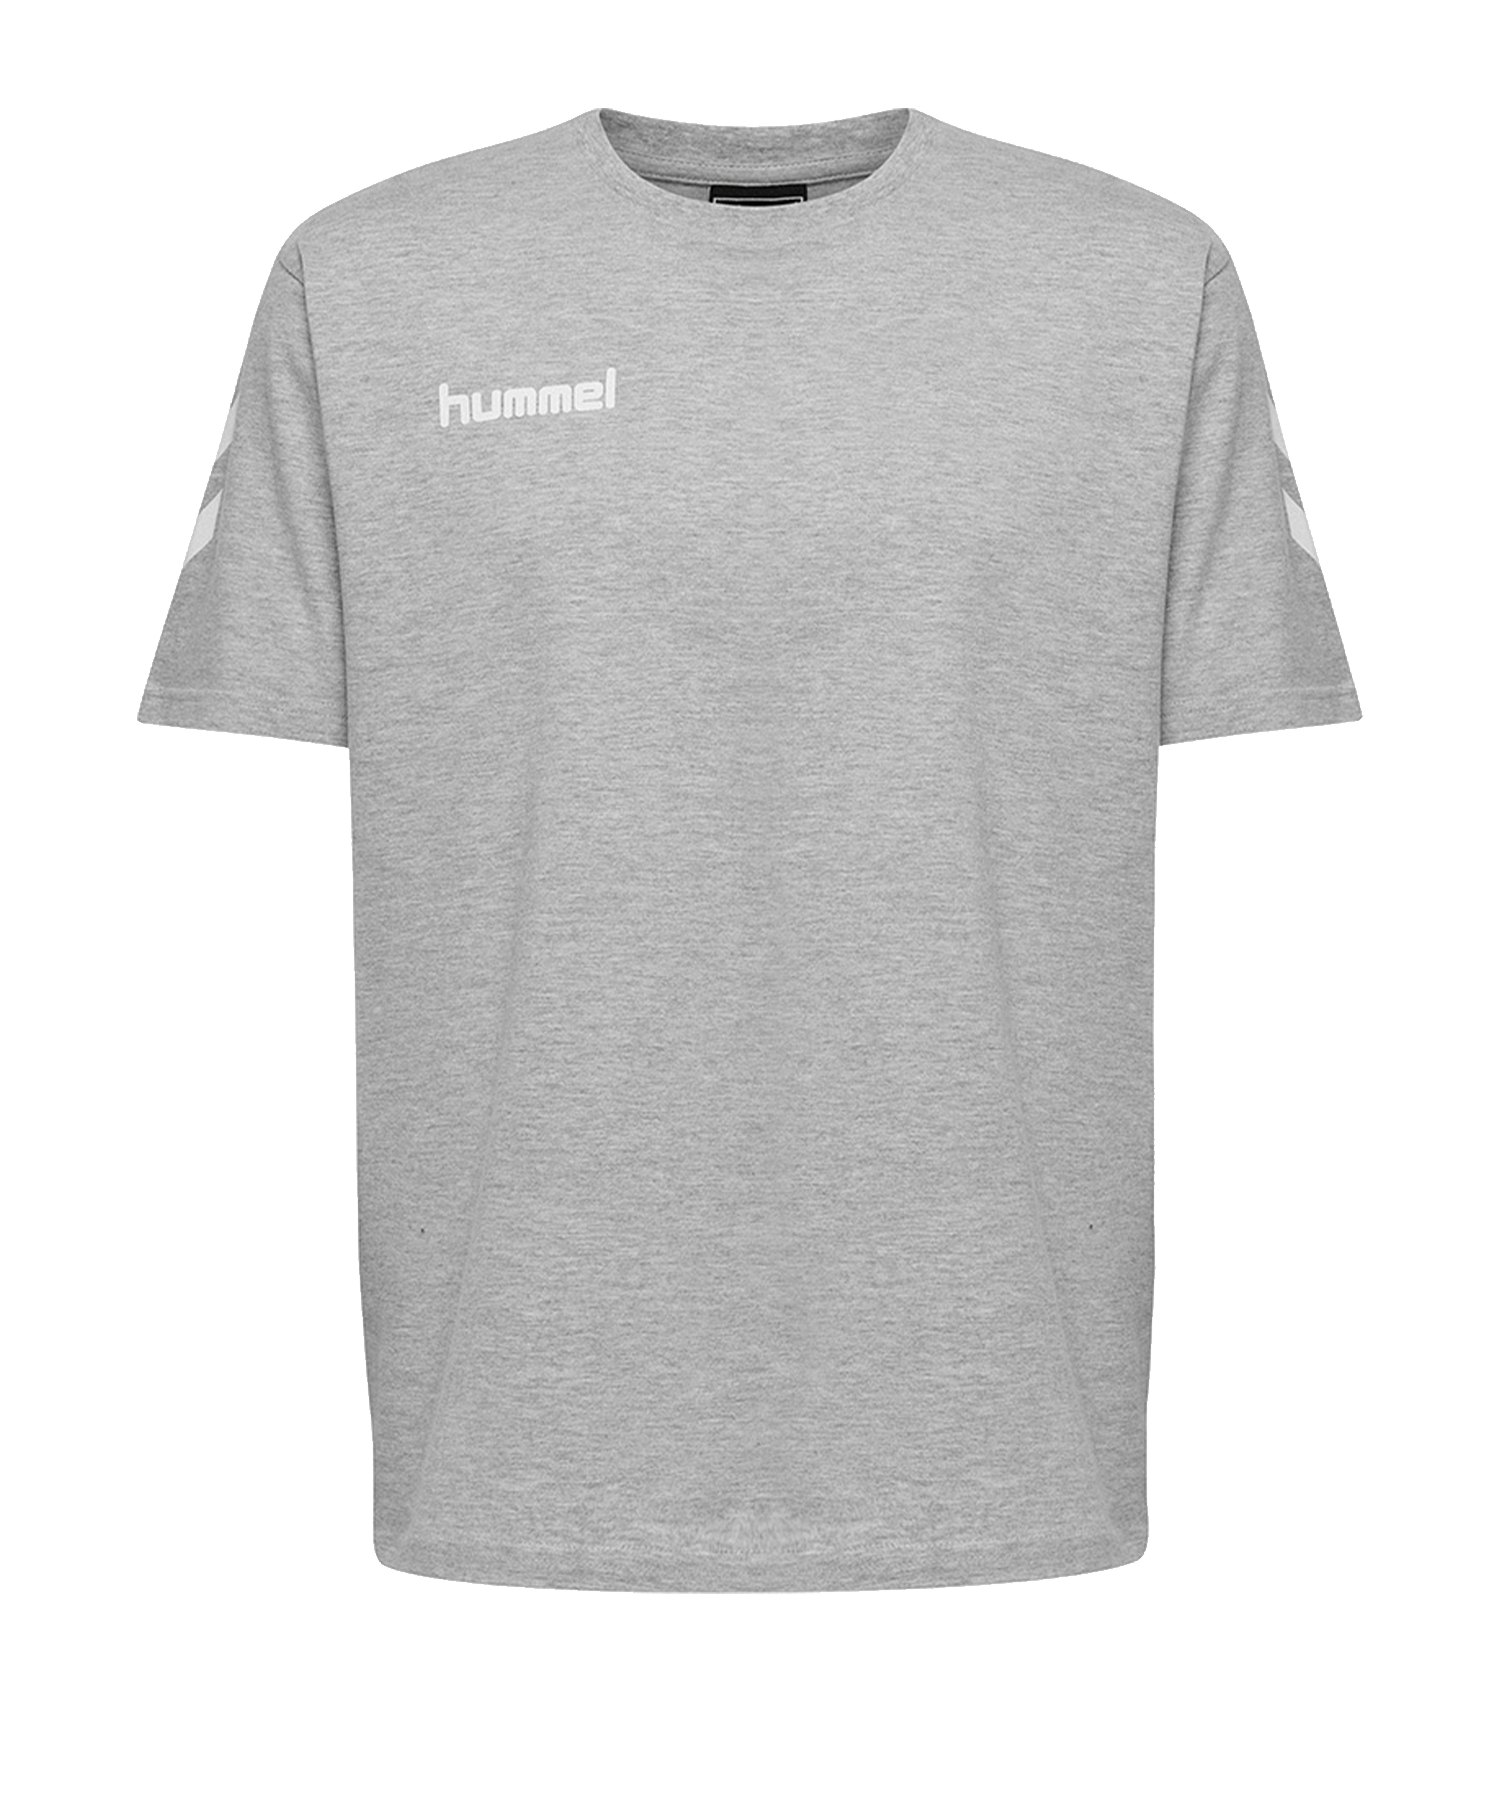 Hummel Cotton T-Shirt Kids Grau F2006 - Grau